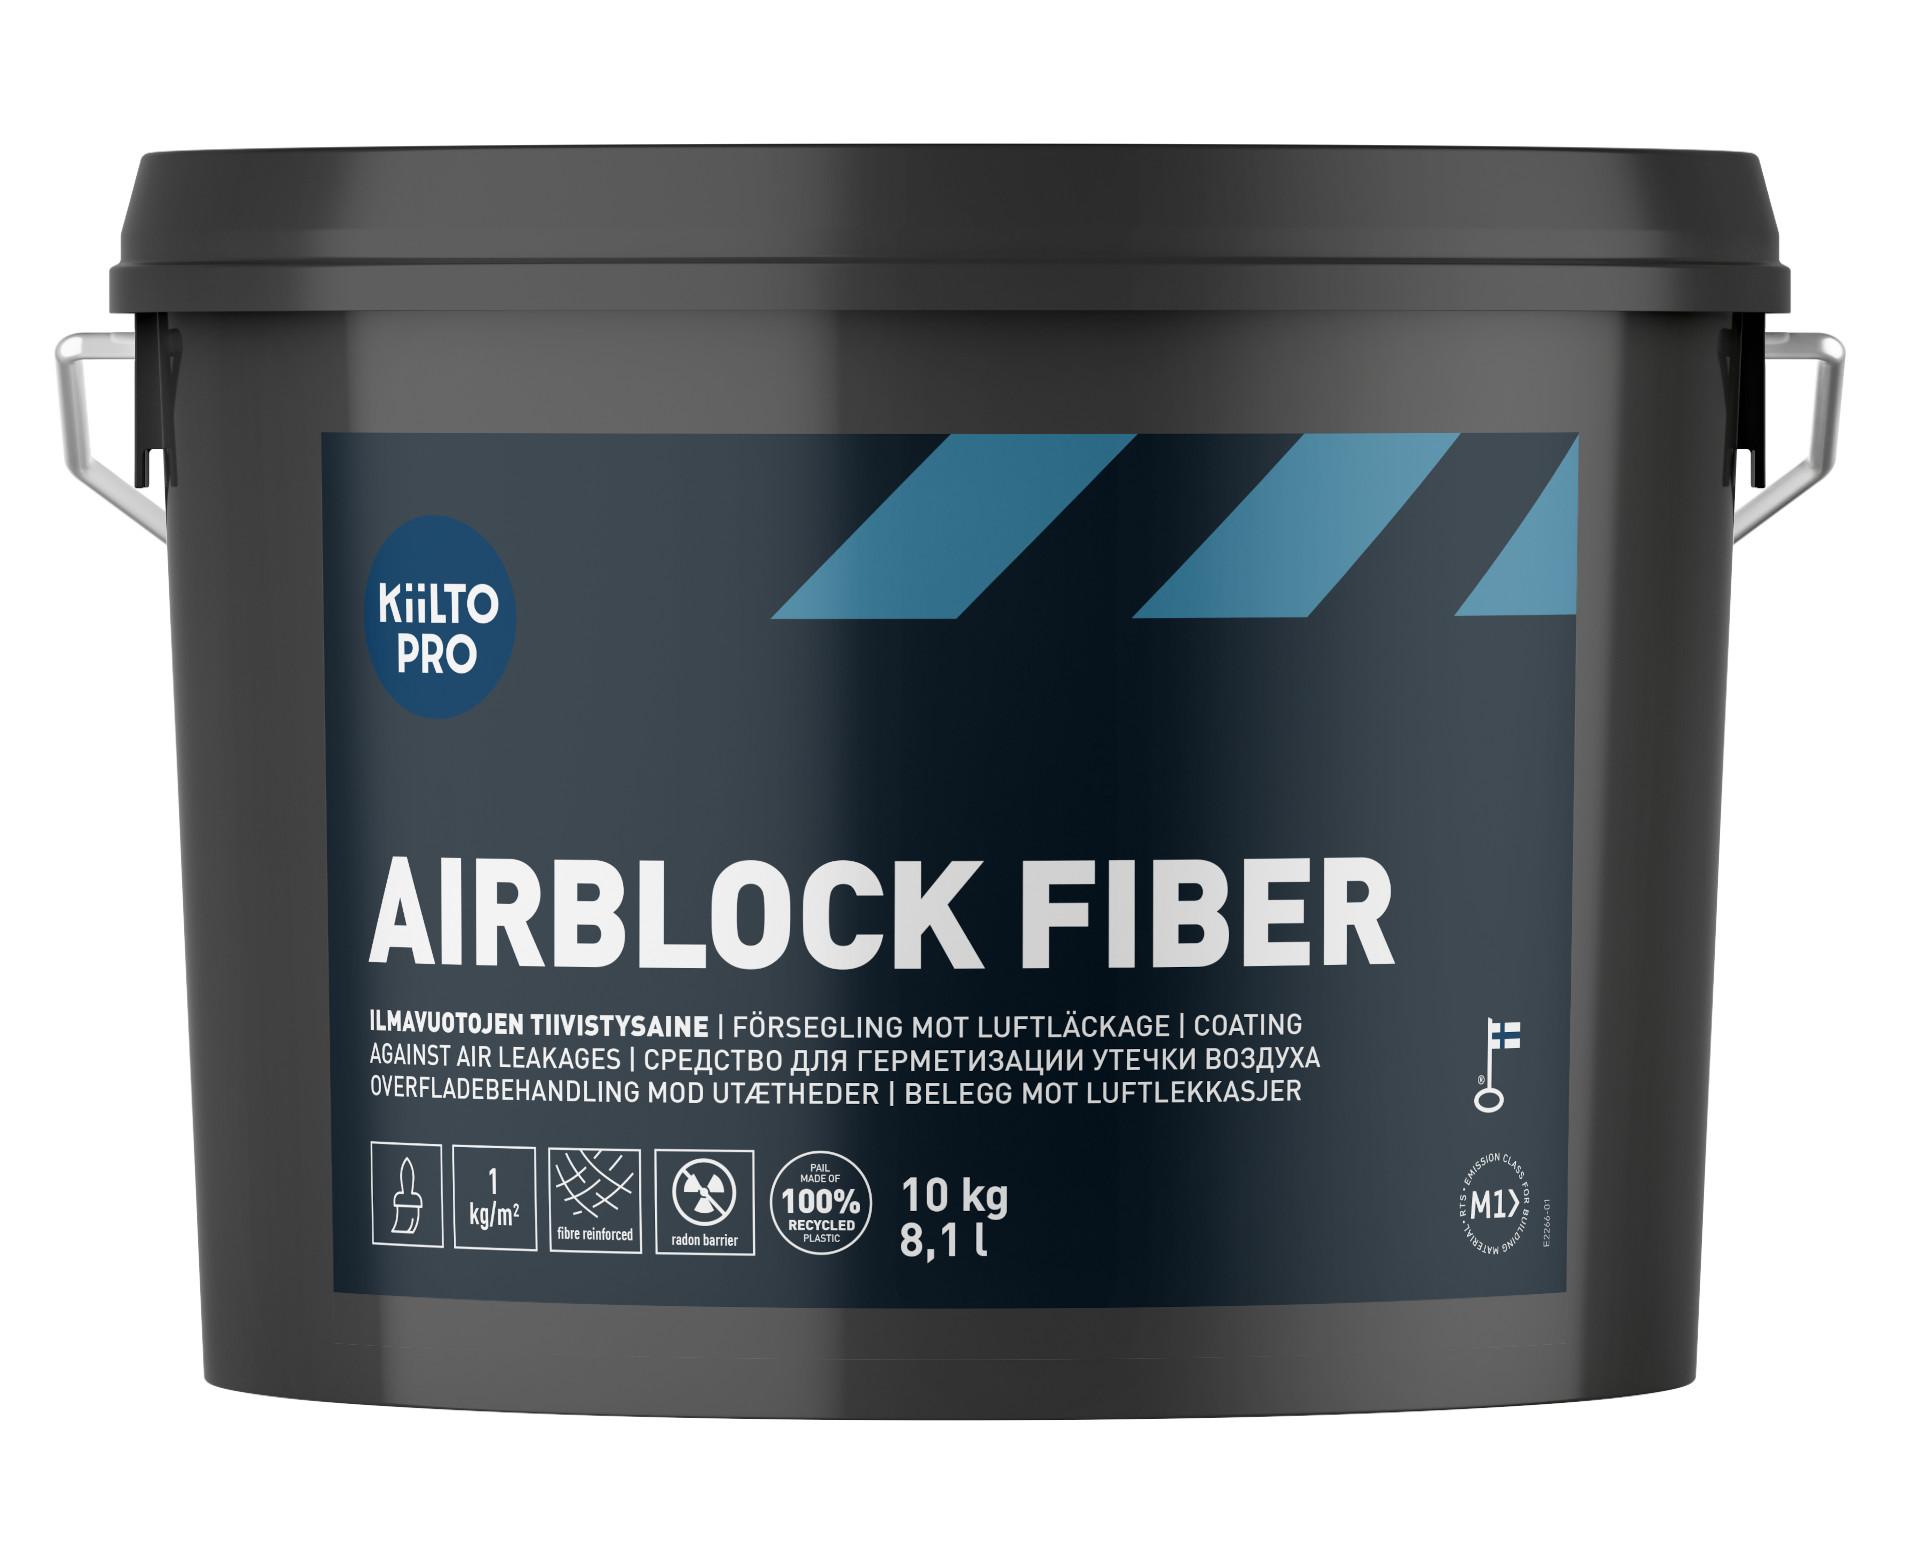 Airblock Fiber